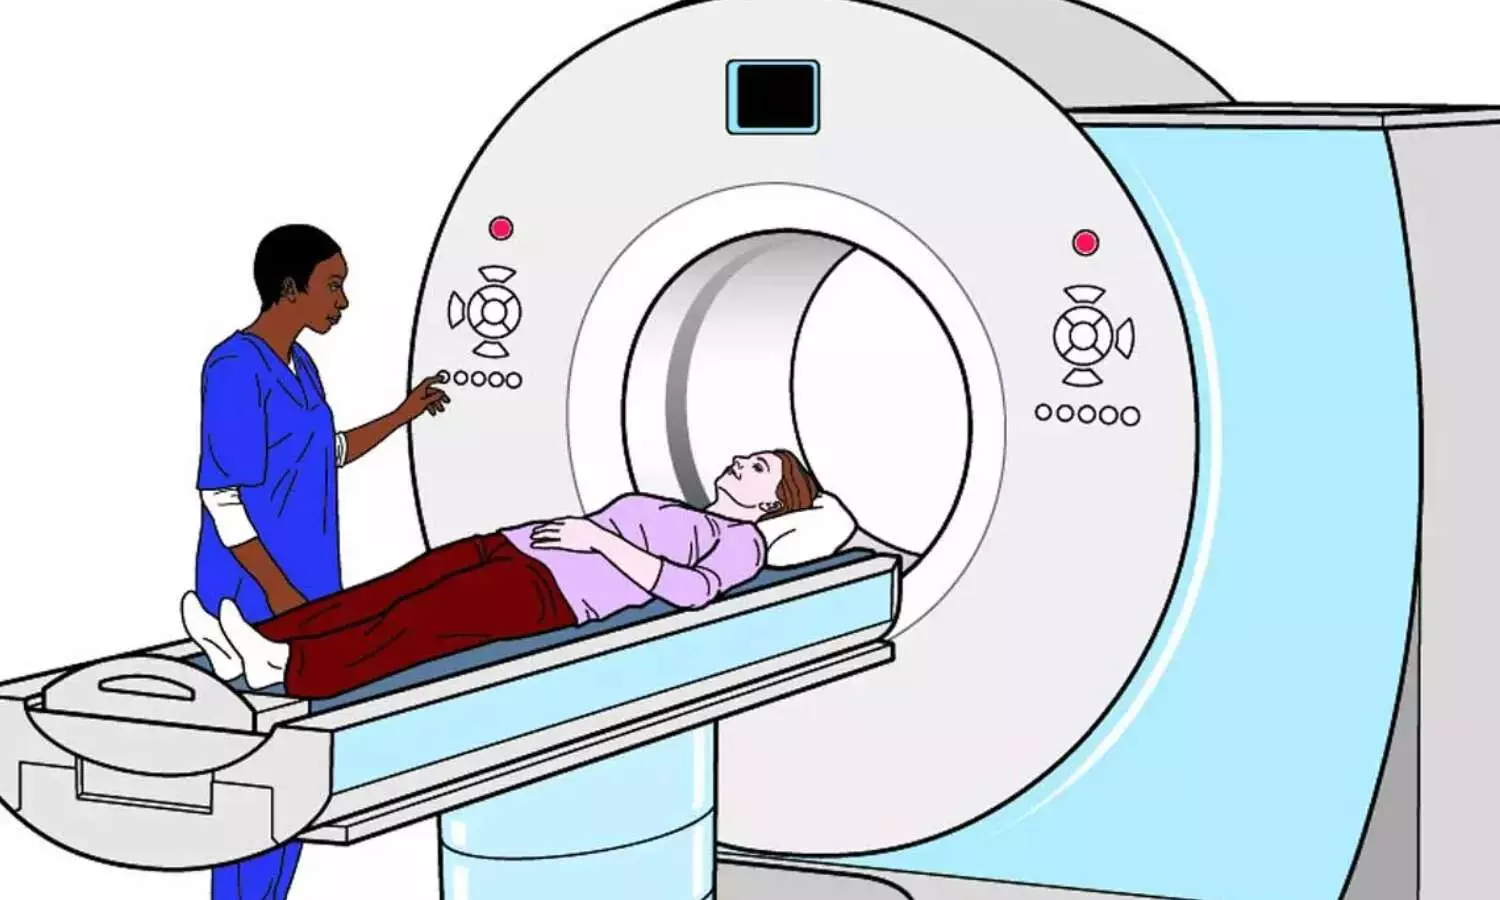 Ultra-high-res MRI reveals migraine brain changes